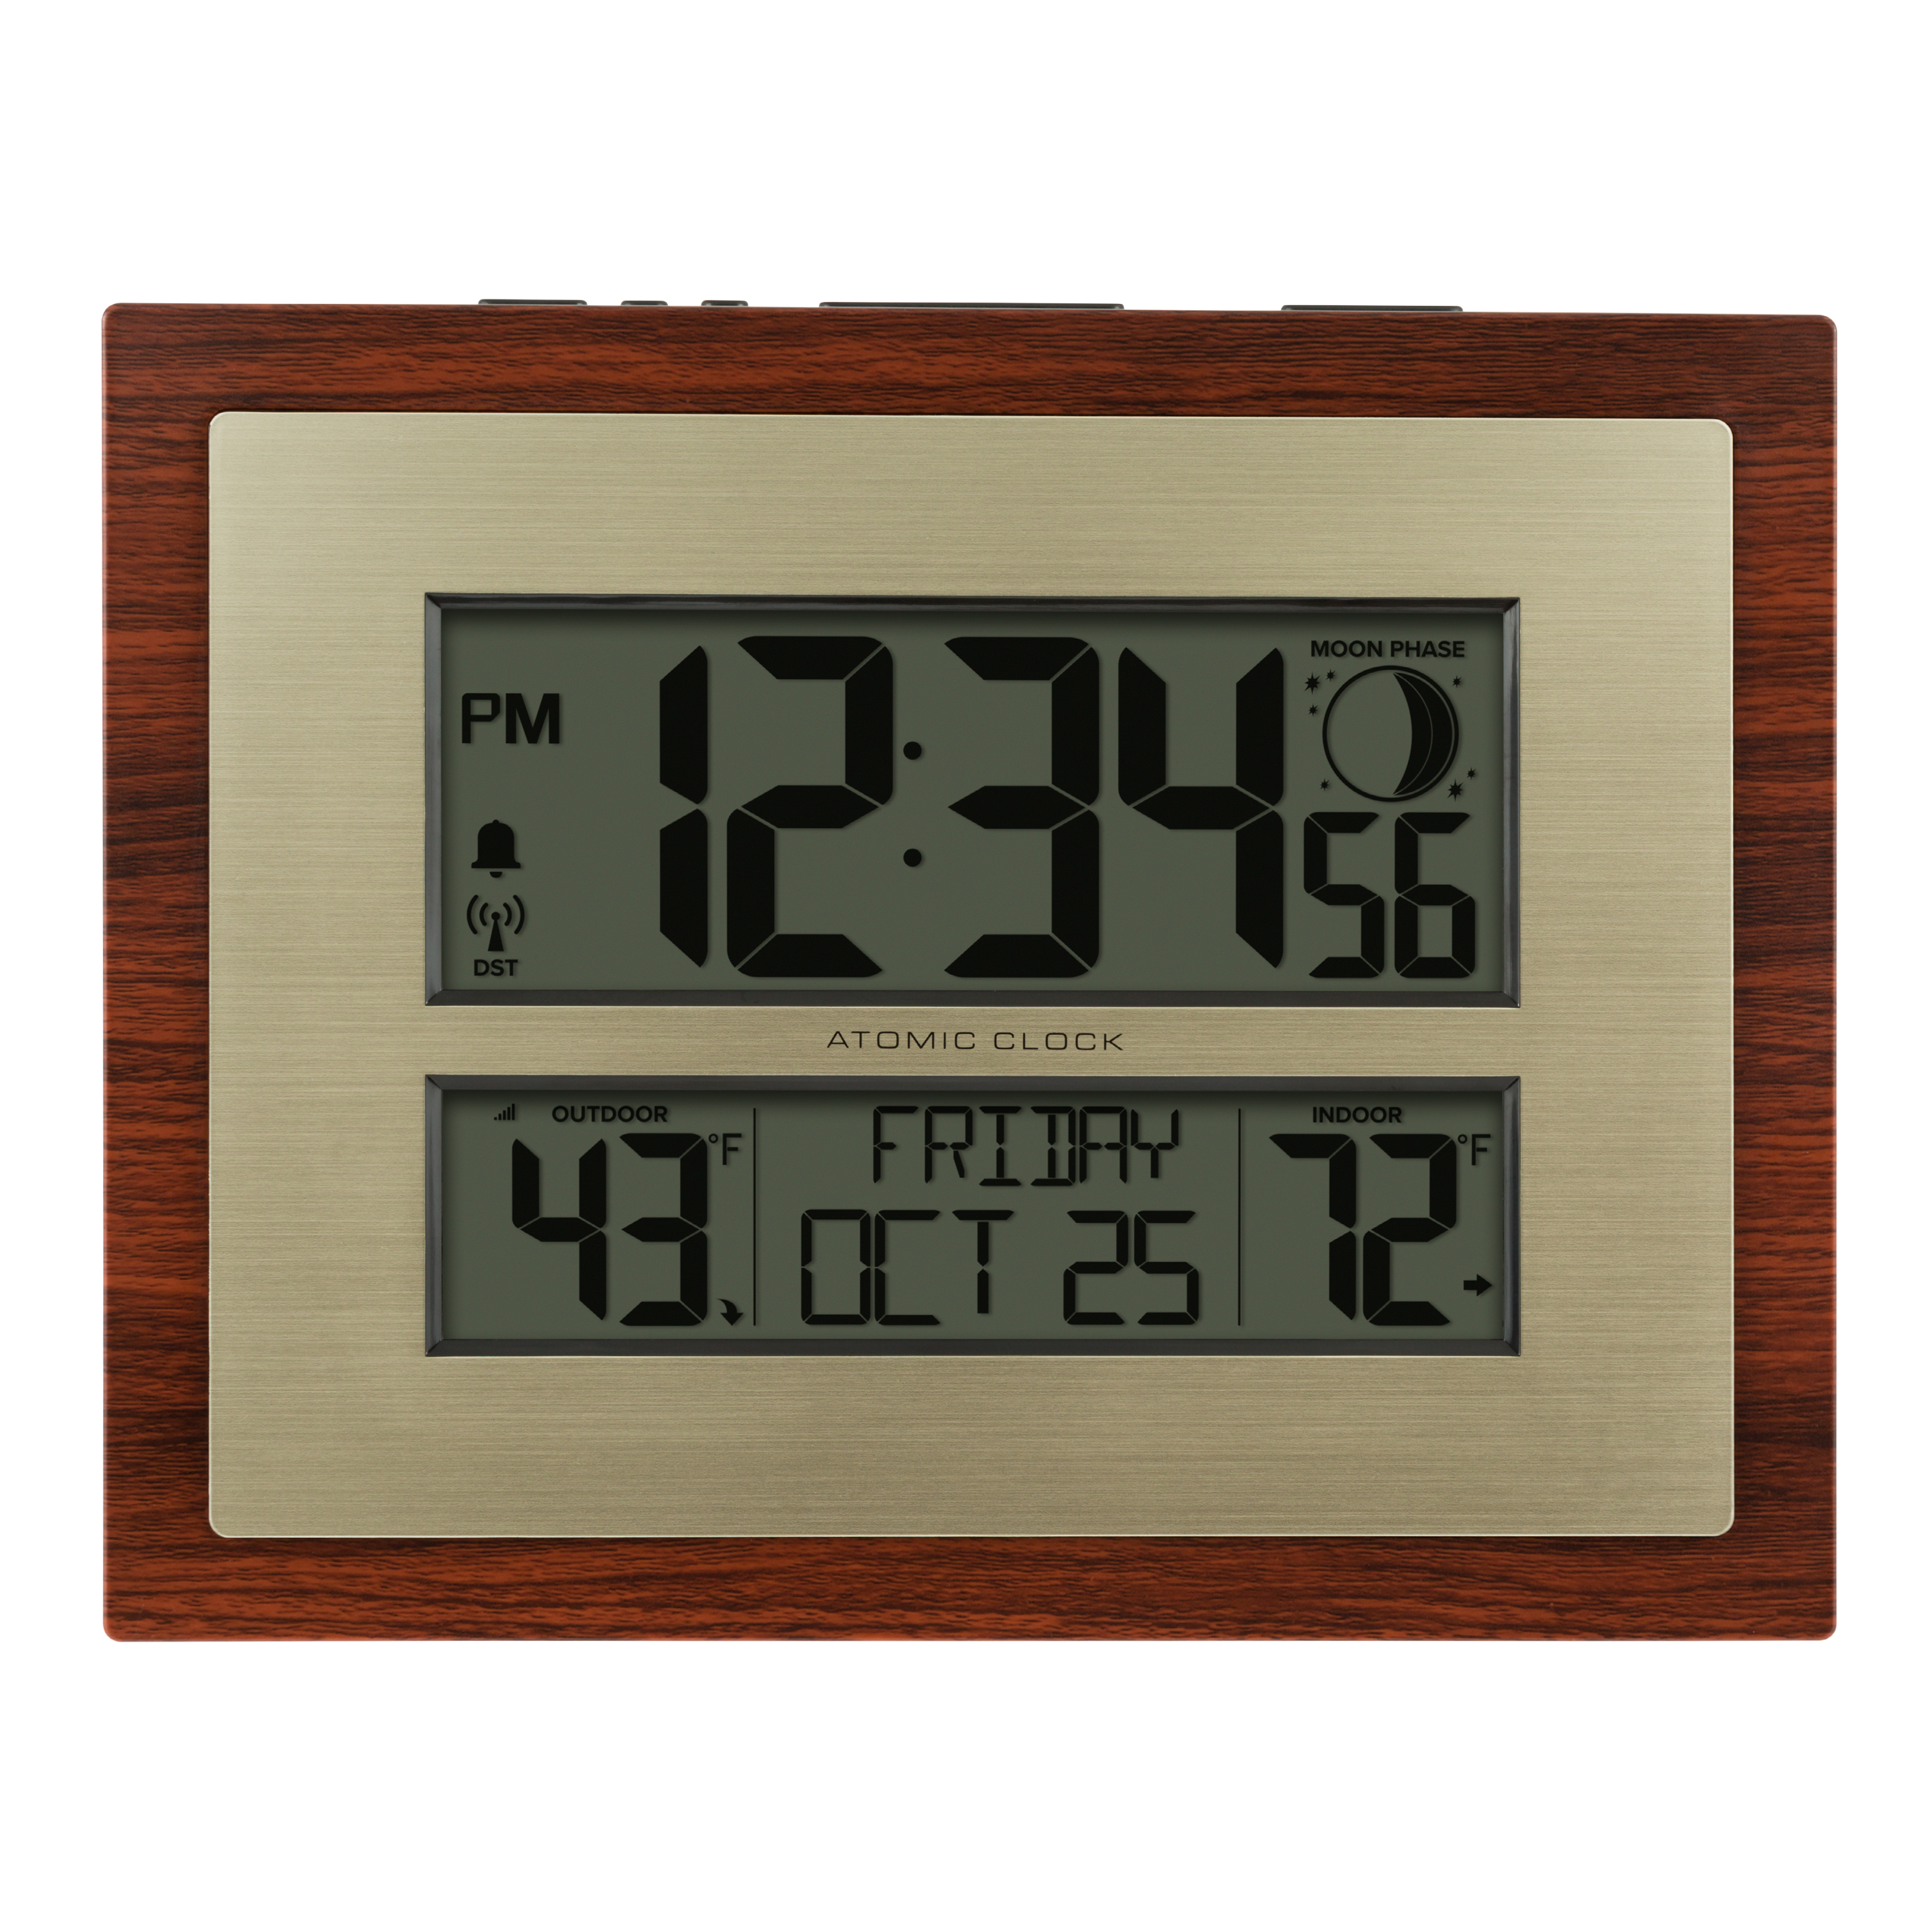 BHG Cherry Finish Modern Digital Atomic Clock with Temperature, W86111 - image 1 of 9